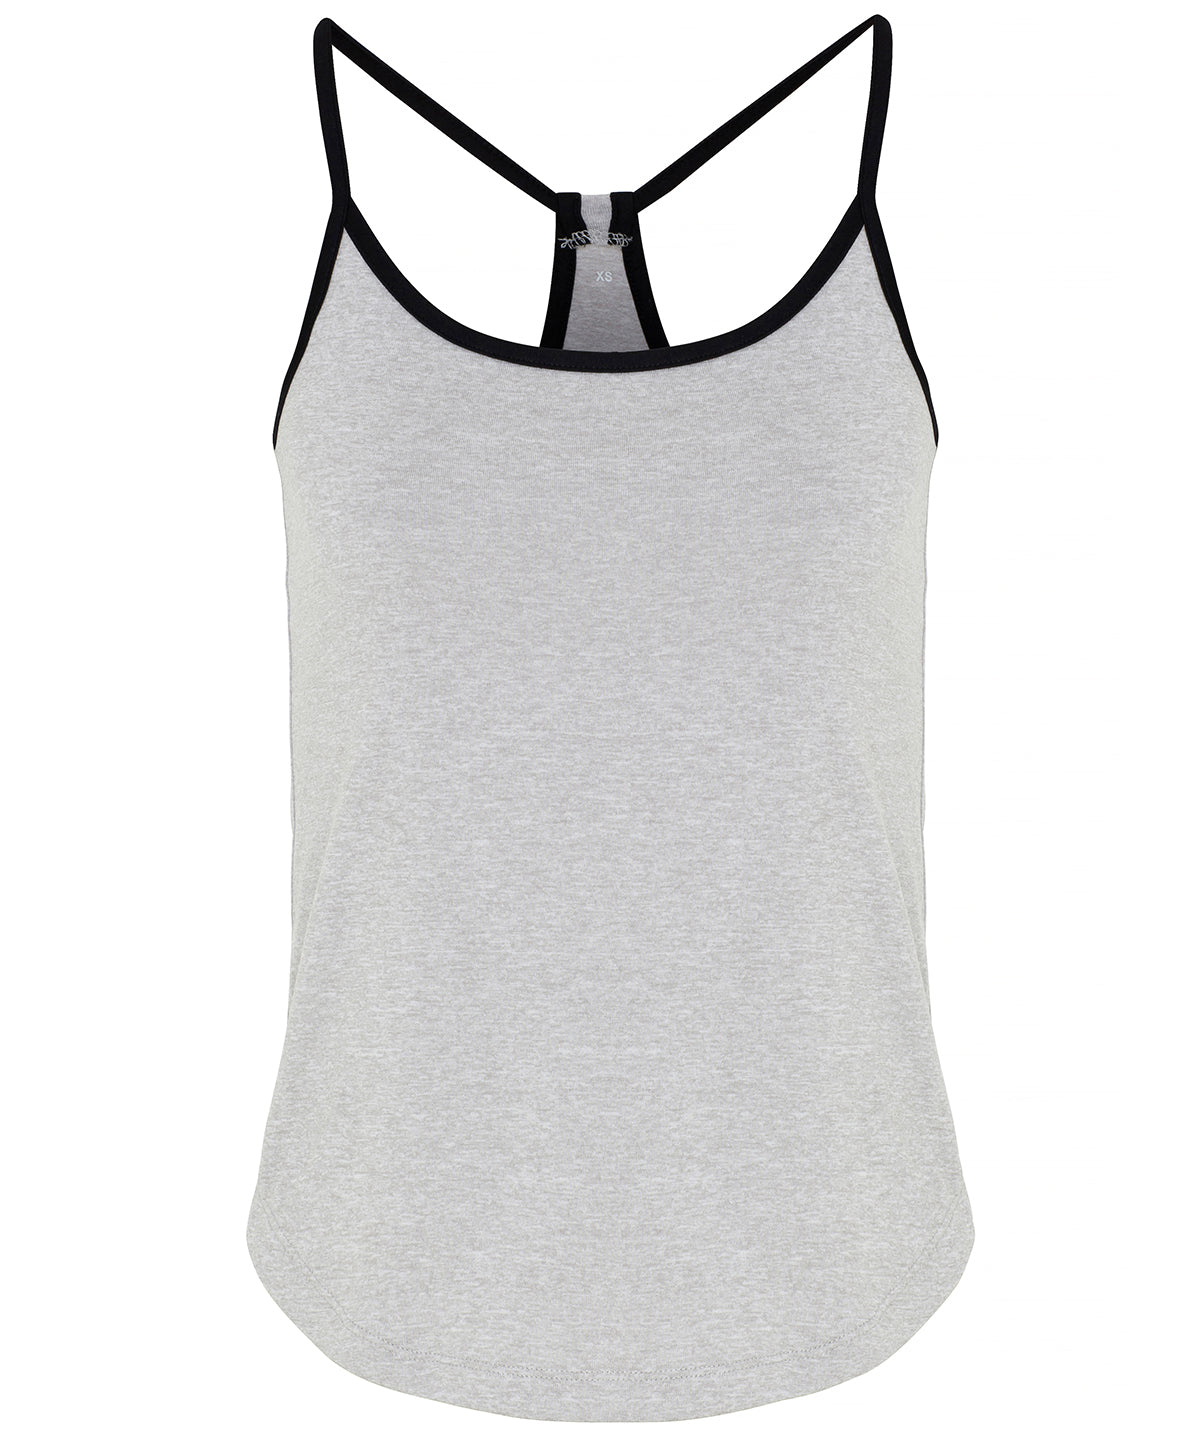 Vesti - Women's TriDri® Yoga Vest